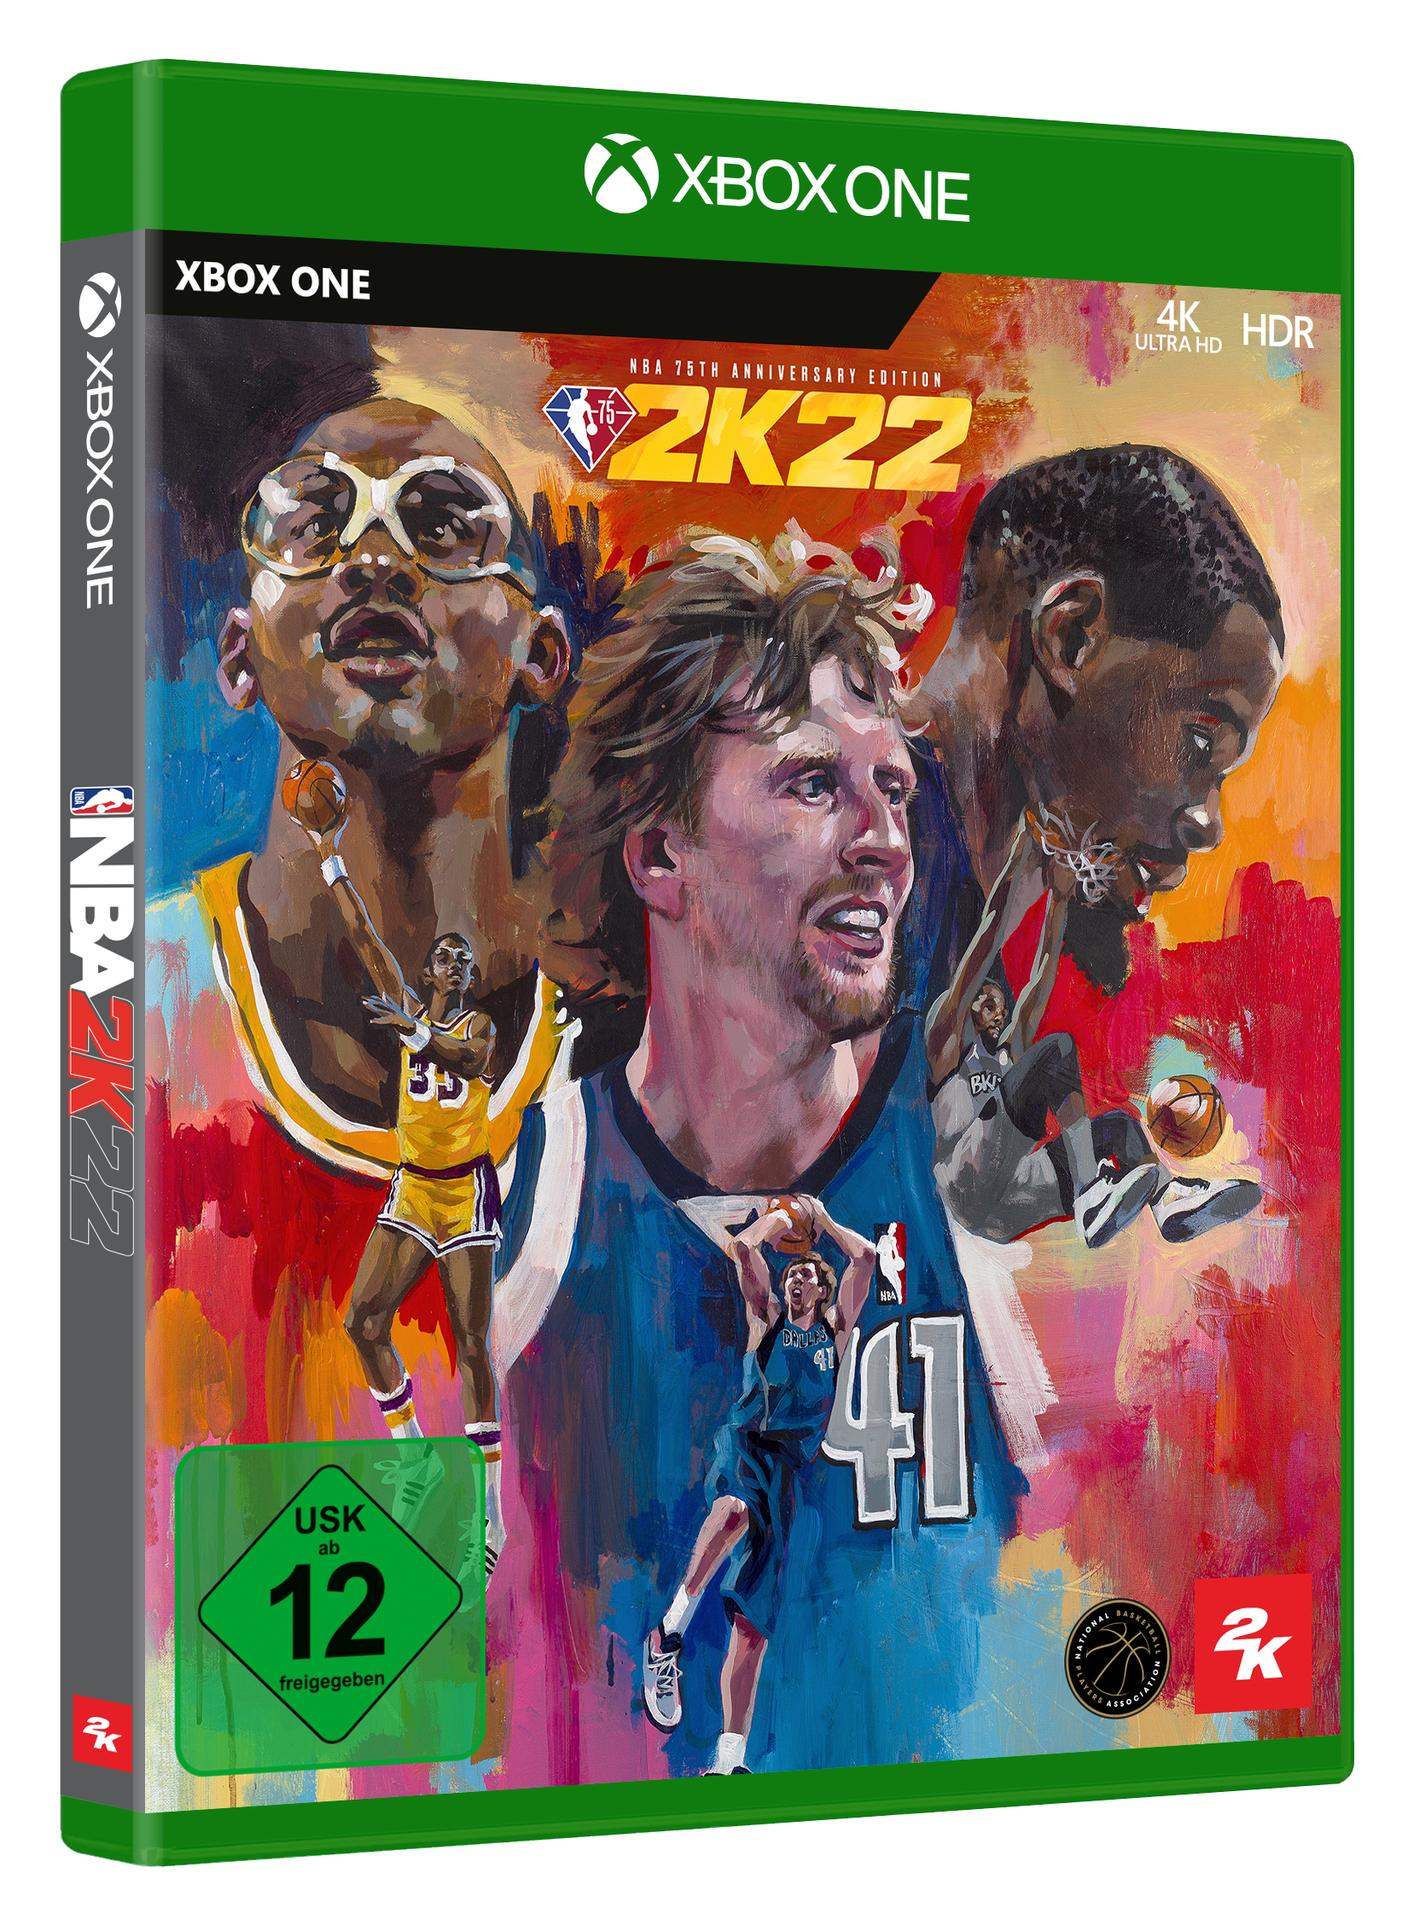 NBA 2K22 - 75th - Anniversary One] Edition [Xbox